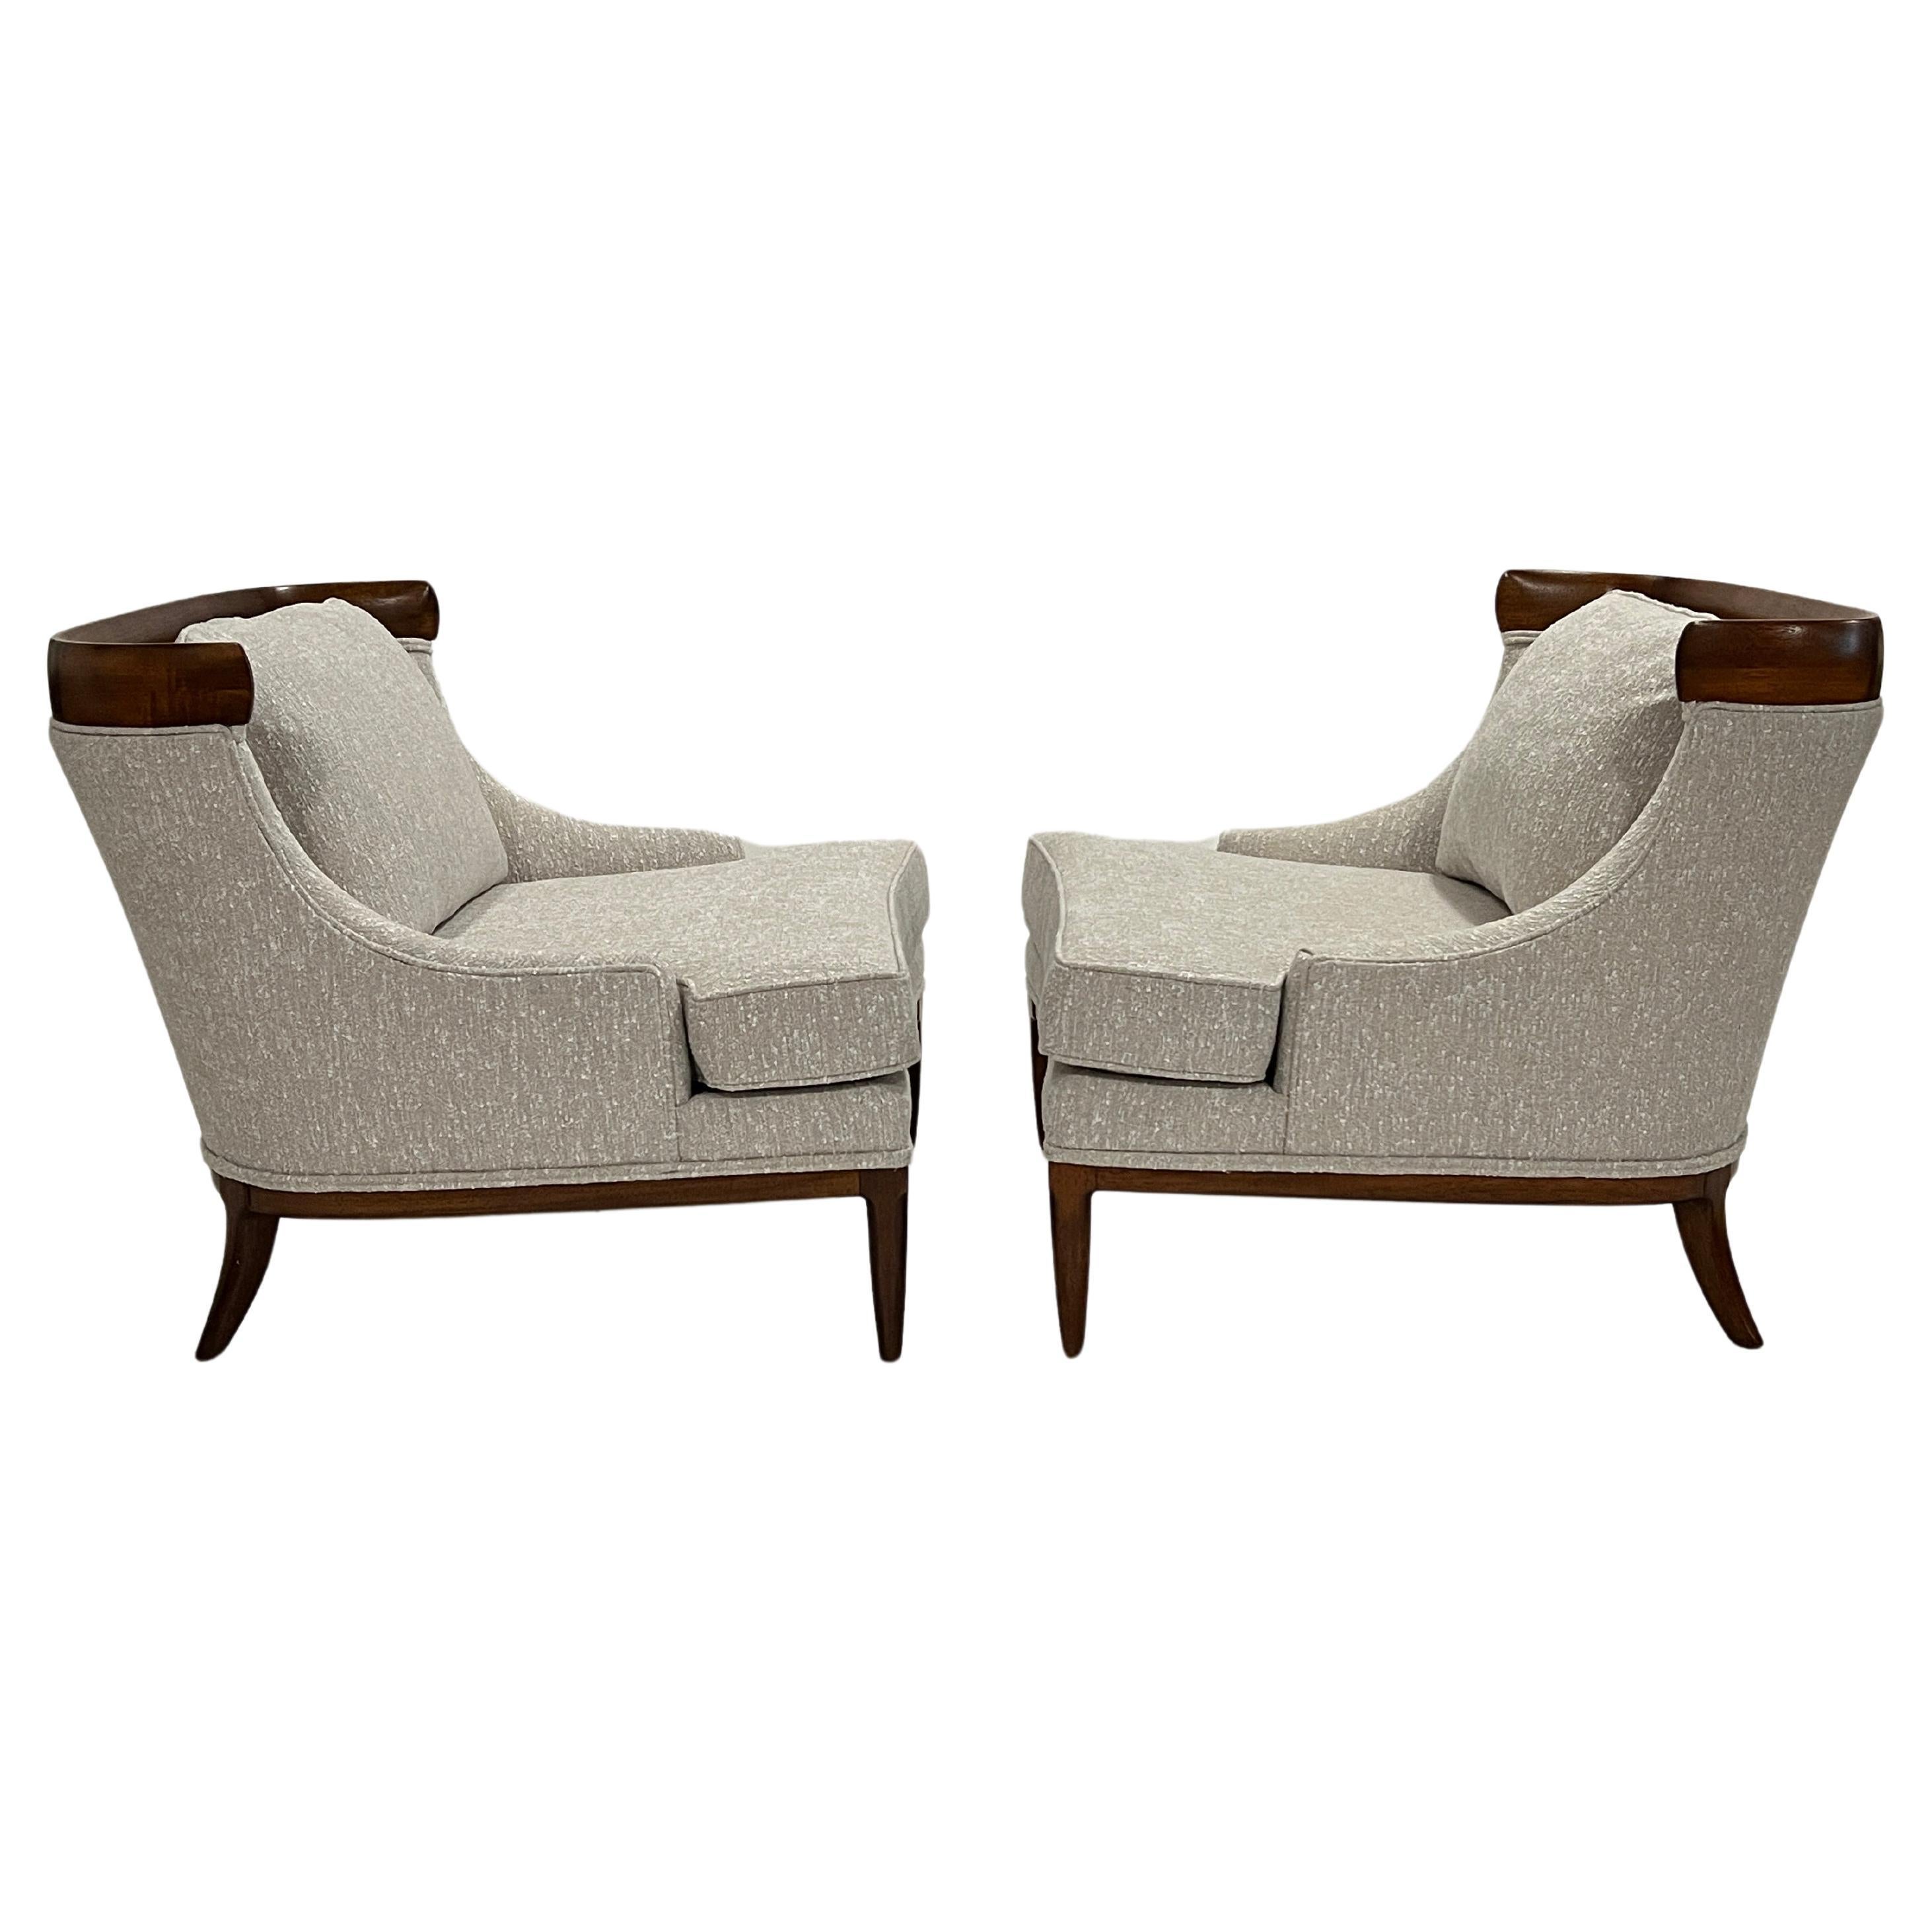 Tomlinson / Erwin - Lambeth Lounge Chairs